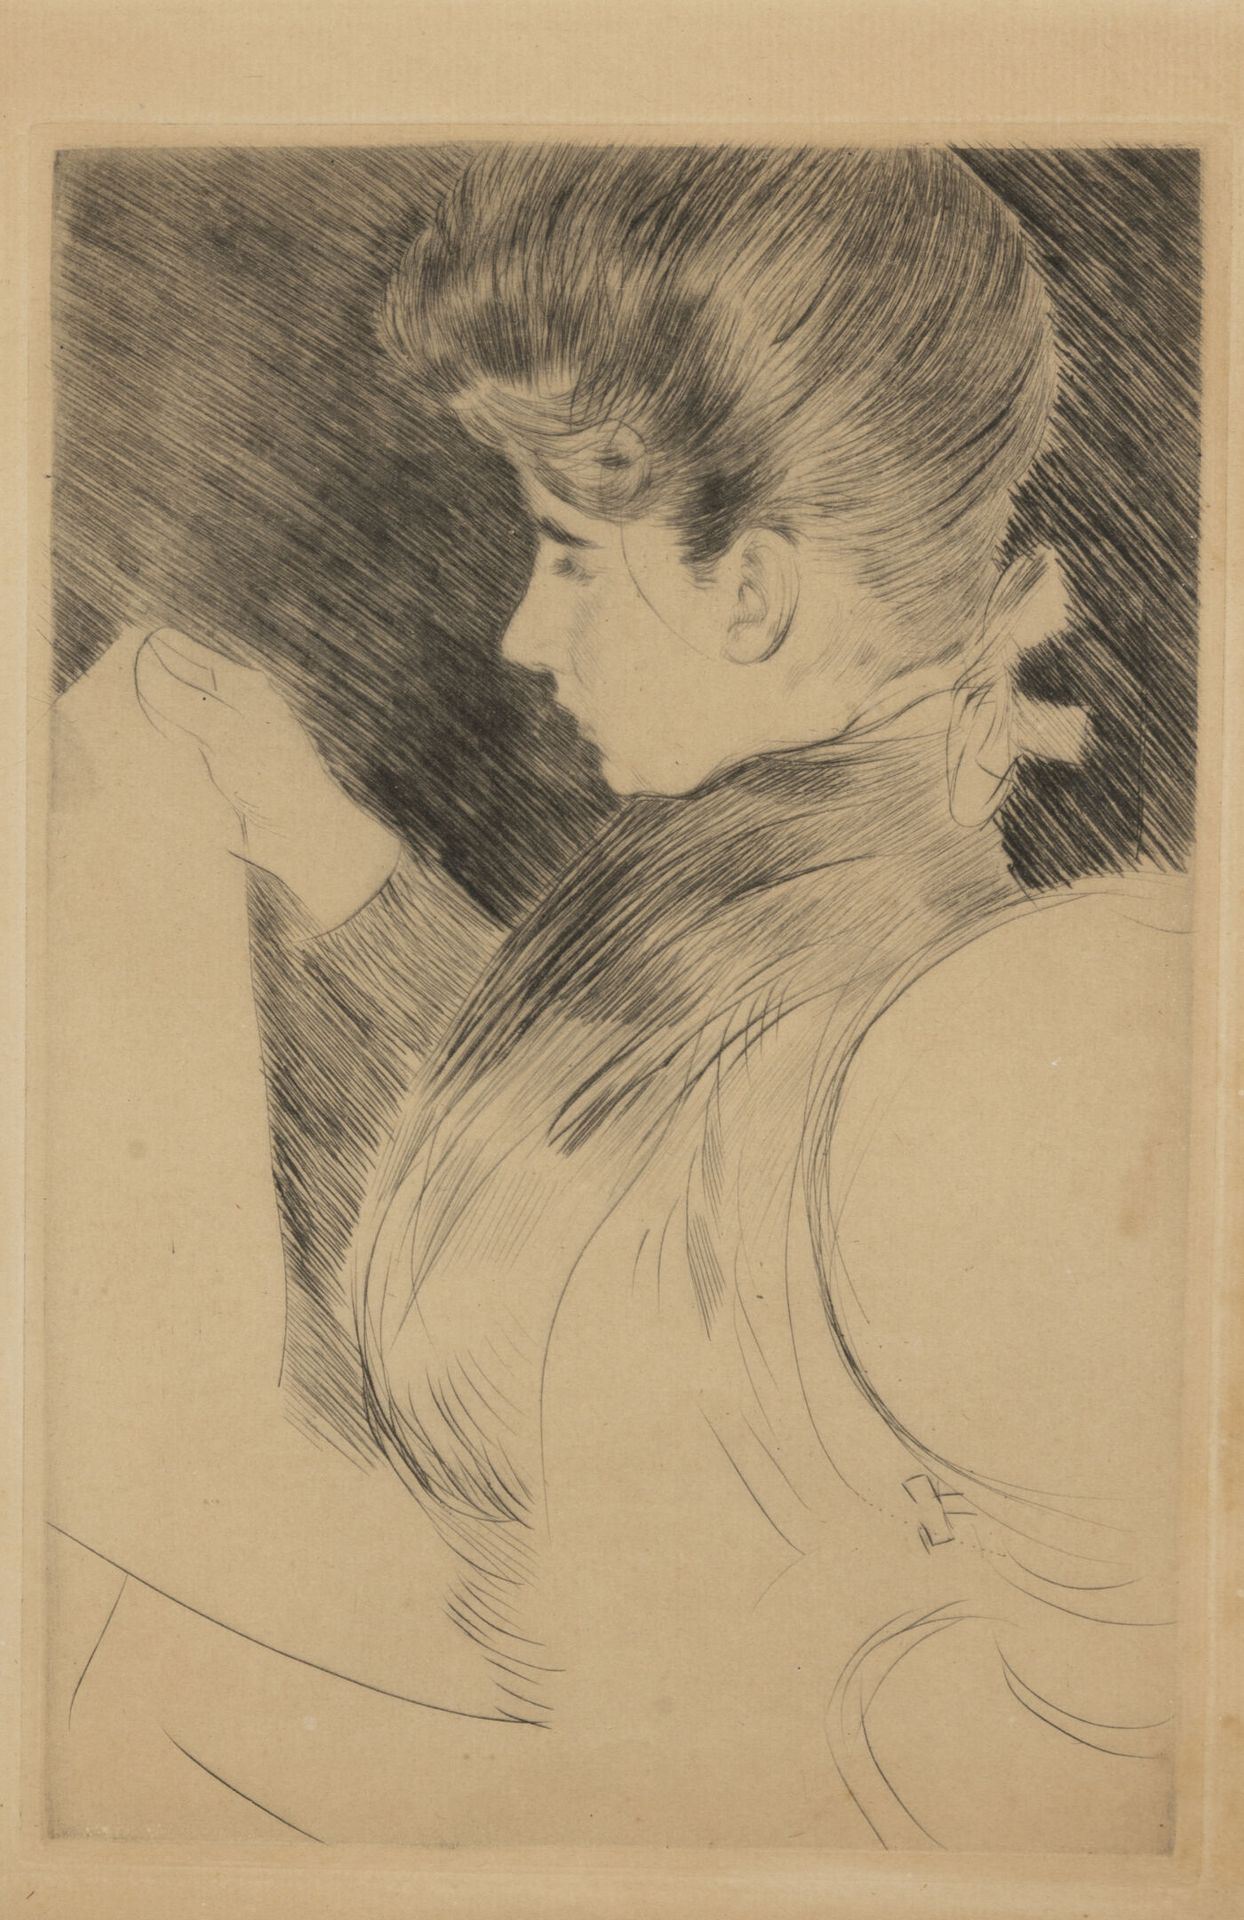 Paul HELLEU (1859-1927) 海尔鲁夫人的肖像，正在阅读。[1892]

纸上蚀刻画。

无符号

托盘：23.5 x 16 cm - 纸张（&hellip;